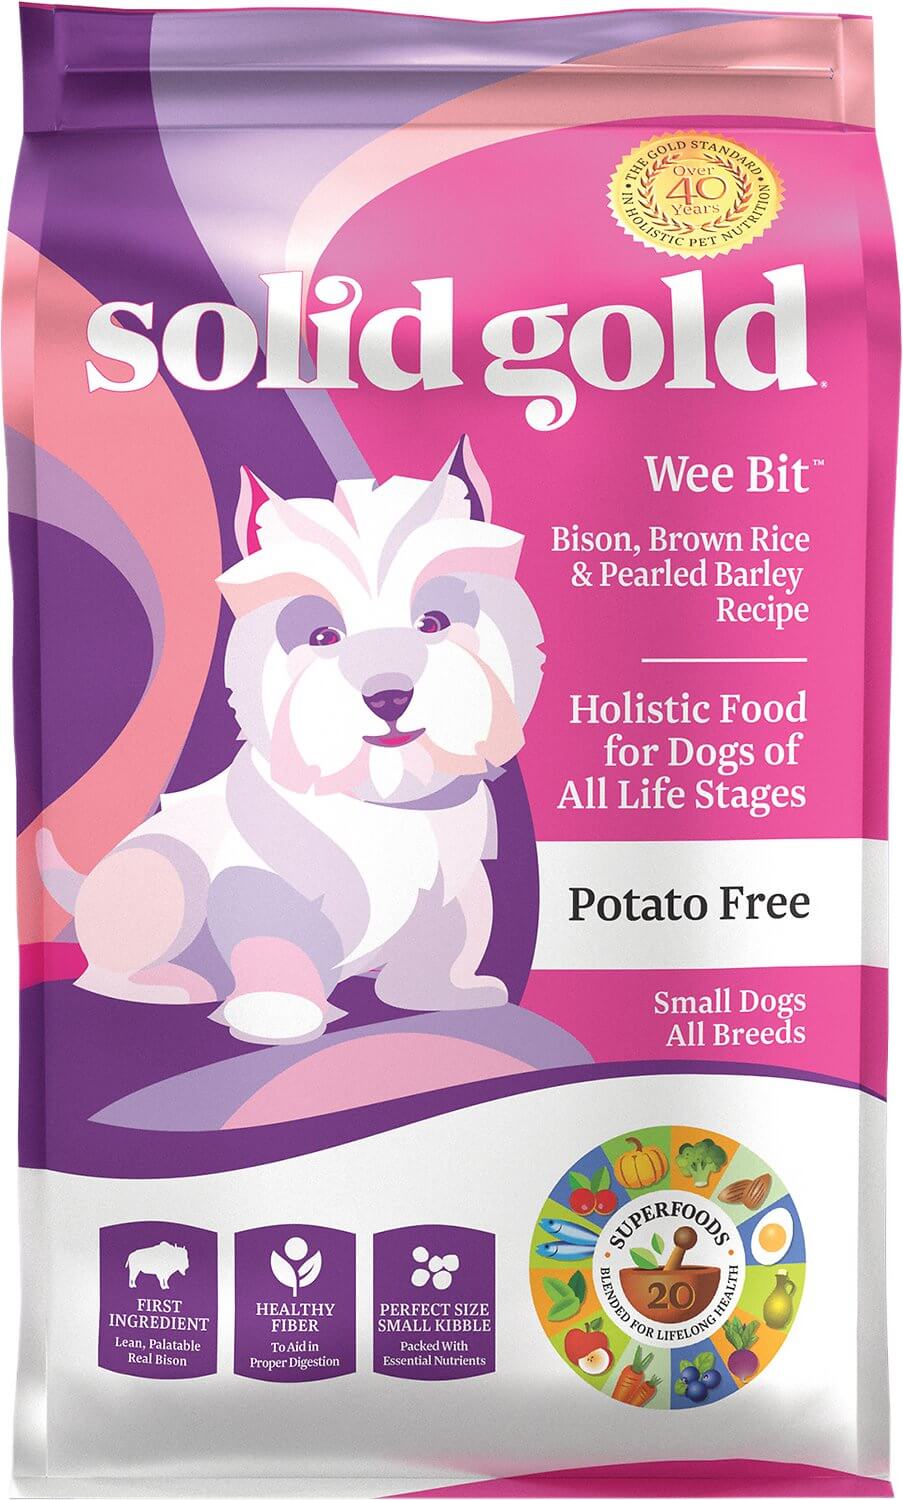 solid gold cat food